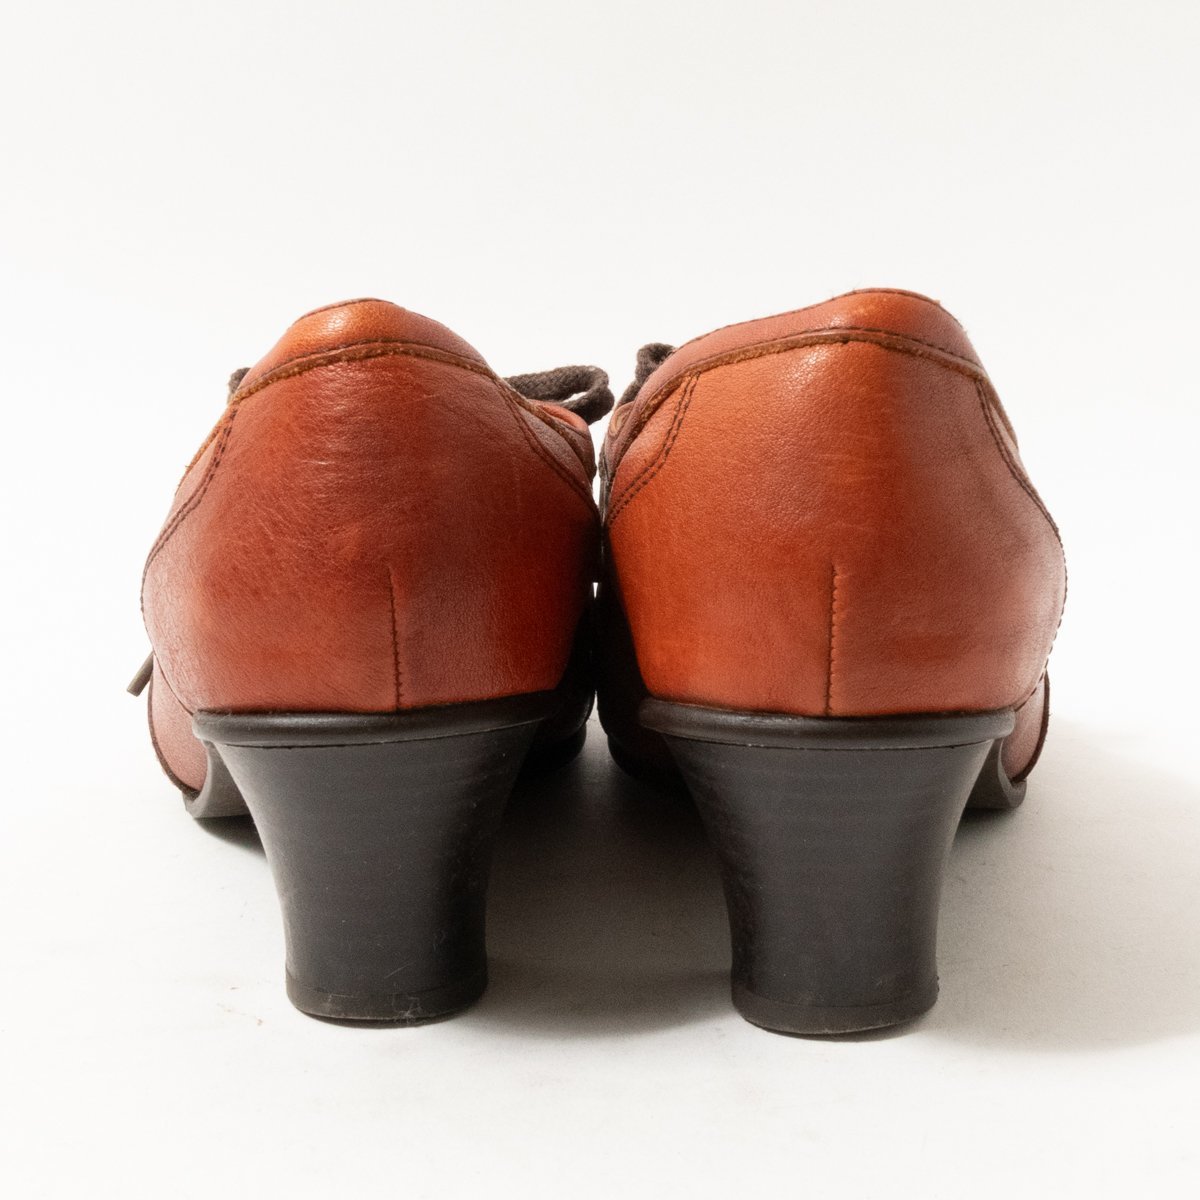 REGAL リーガル ブーティー ブラウン 茶 23cm レザー 本革 日本製 レディース ラウンドトゥ おじ靴 カジュアル 靴下コーデ シューズ 靴の画像4